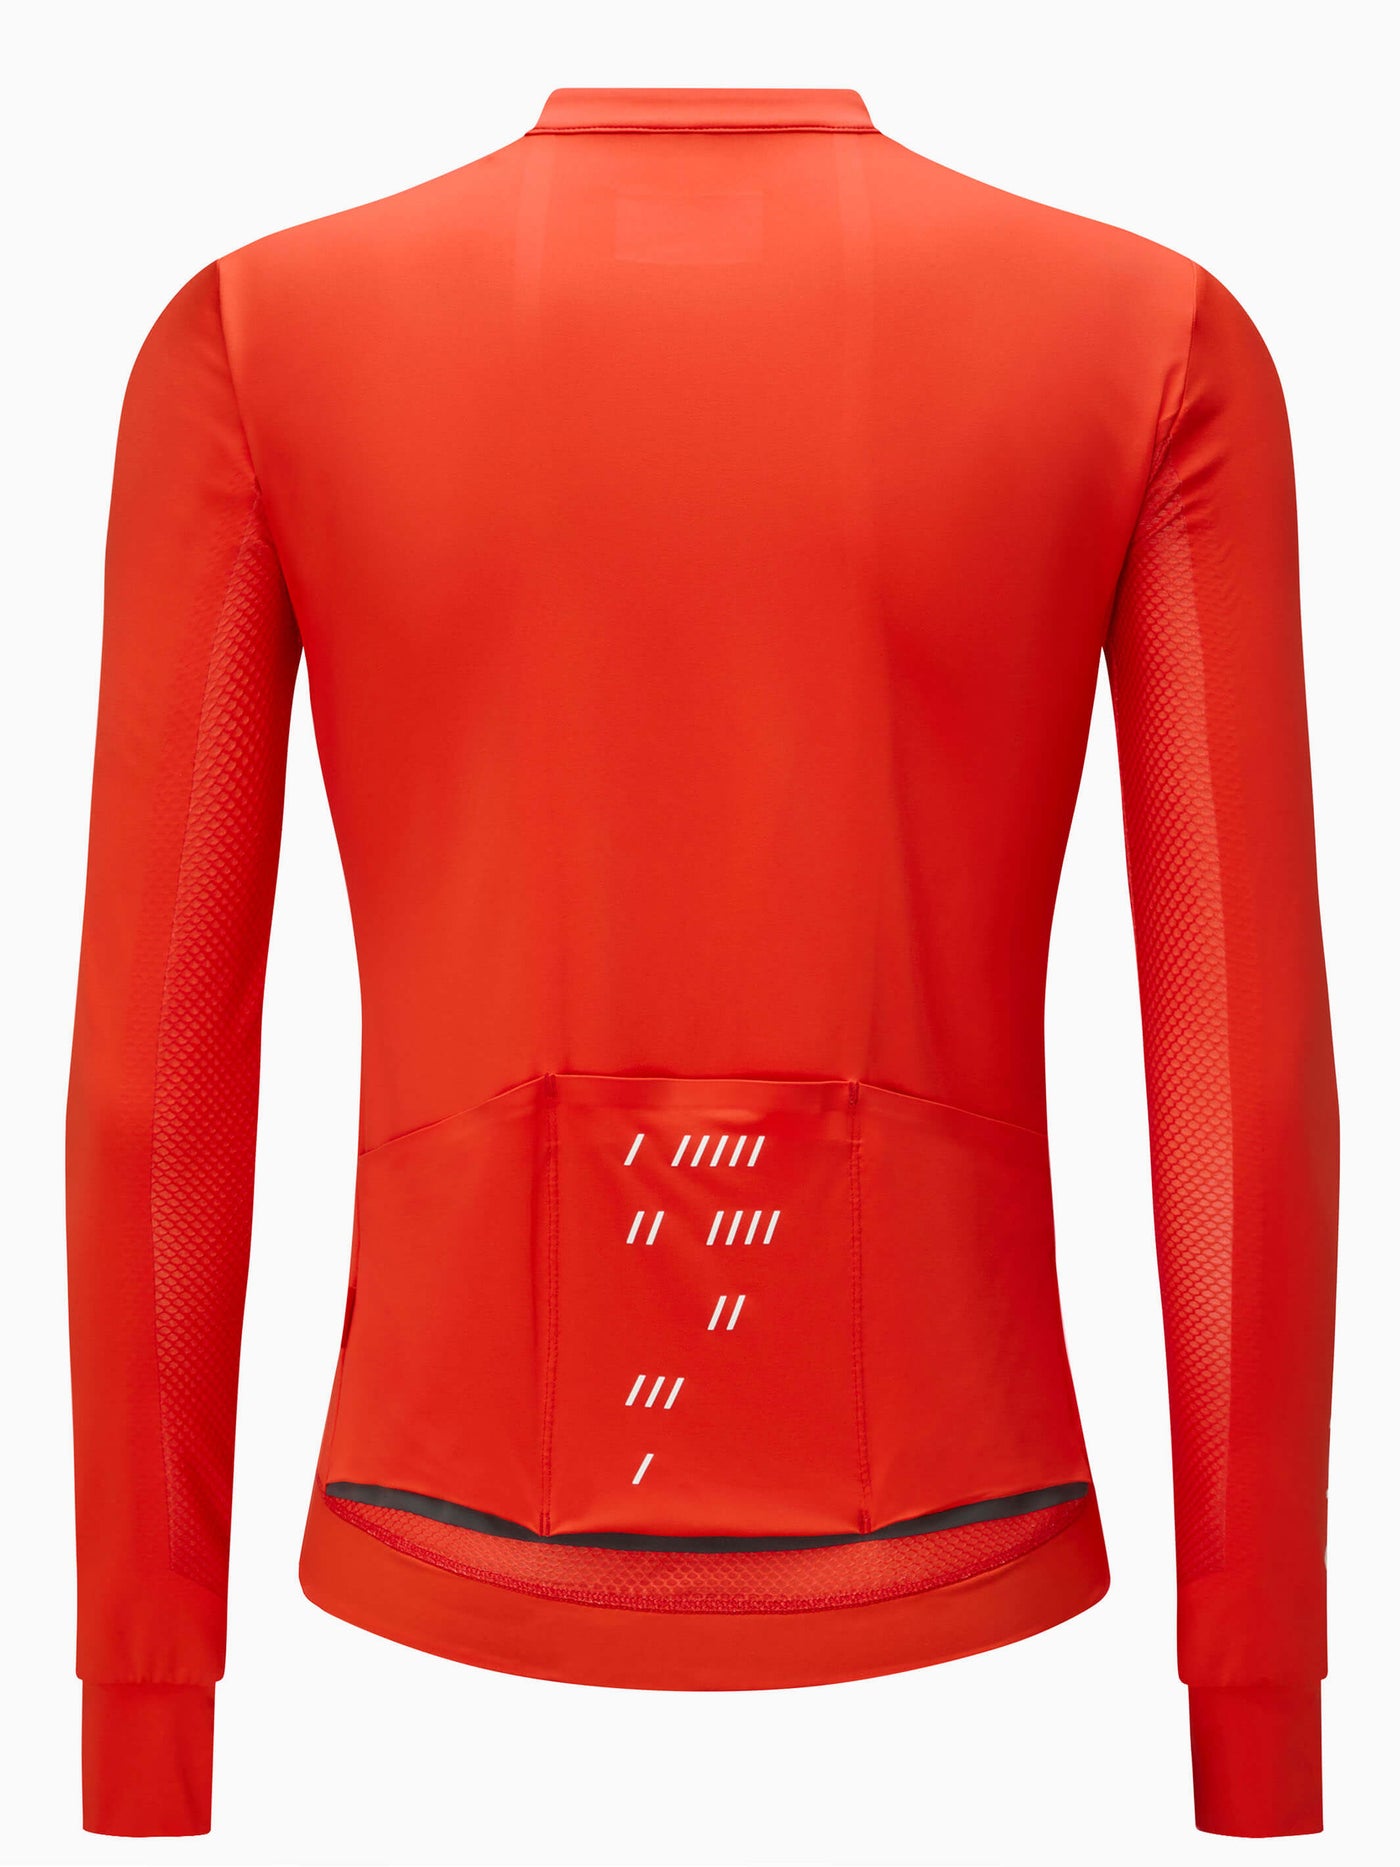 Women's Long Sleeve Training Jersey - Fire Red